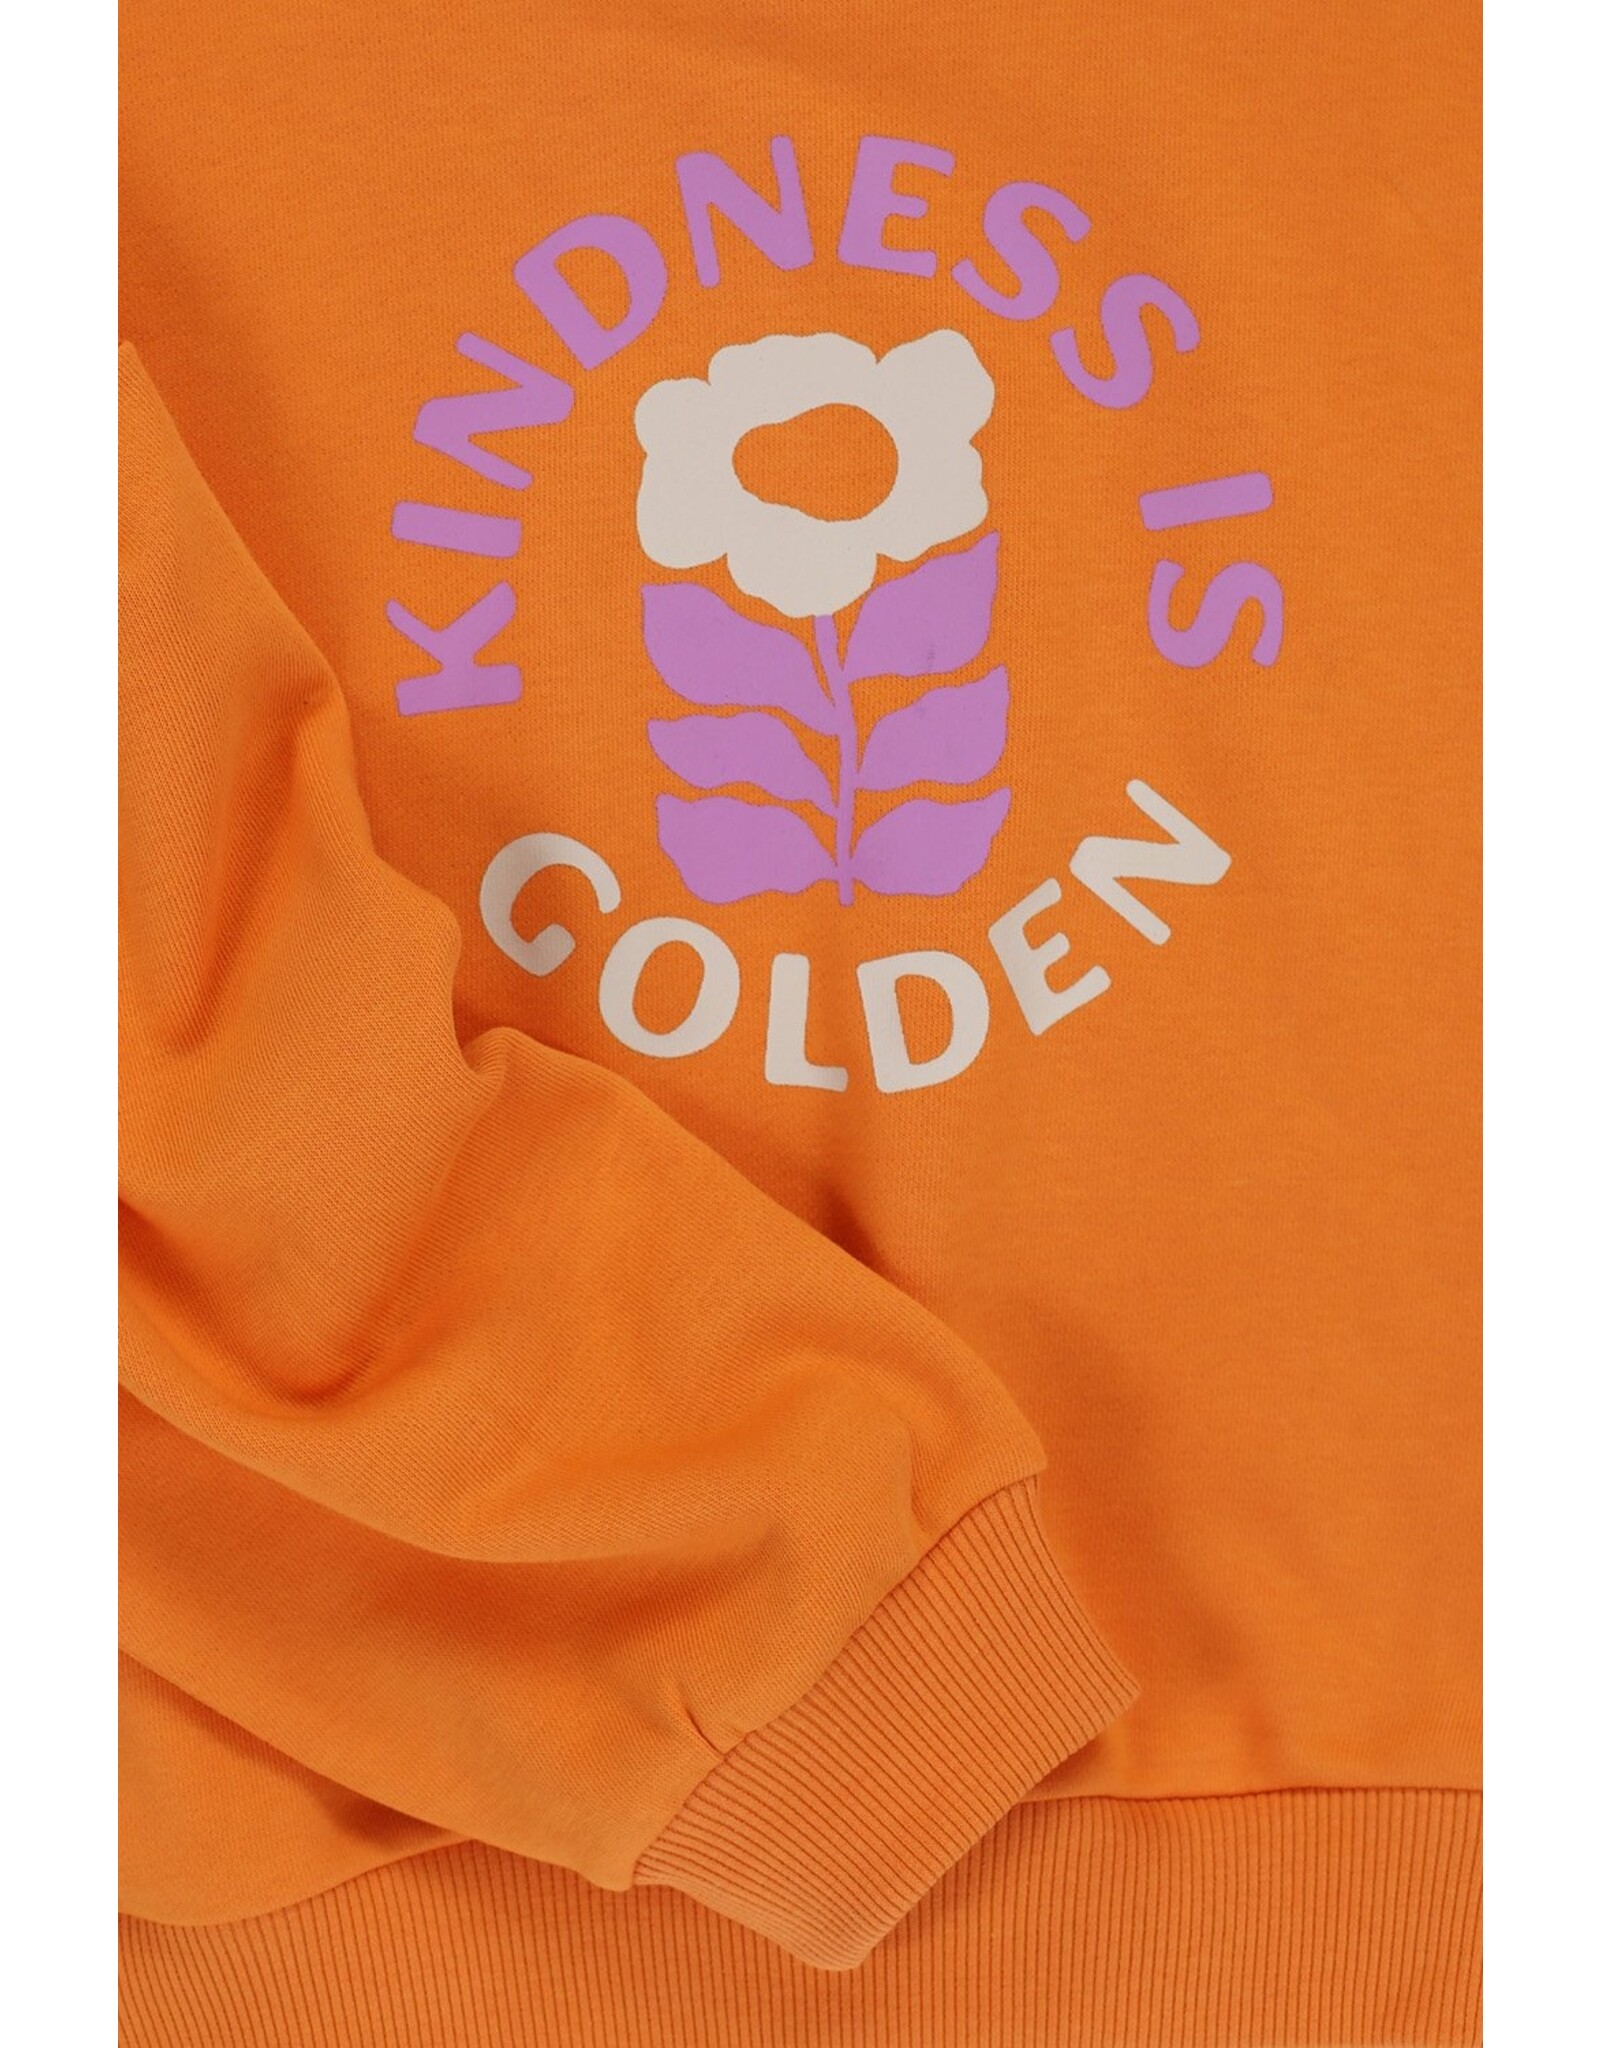 LOOXS Little pulls/sweats/card Little sweater Orange